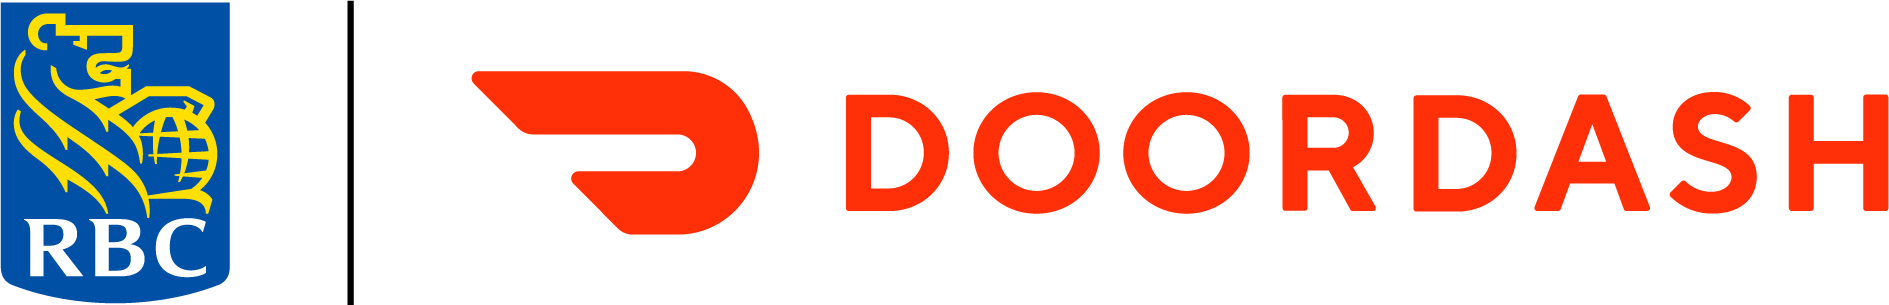 RBC Doordash logo